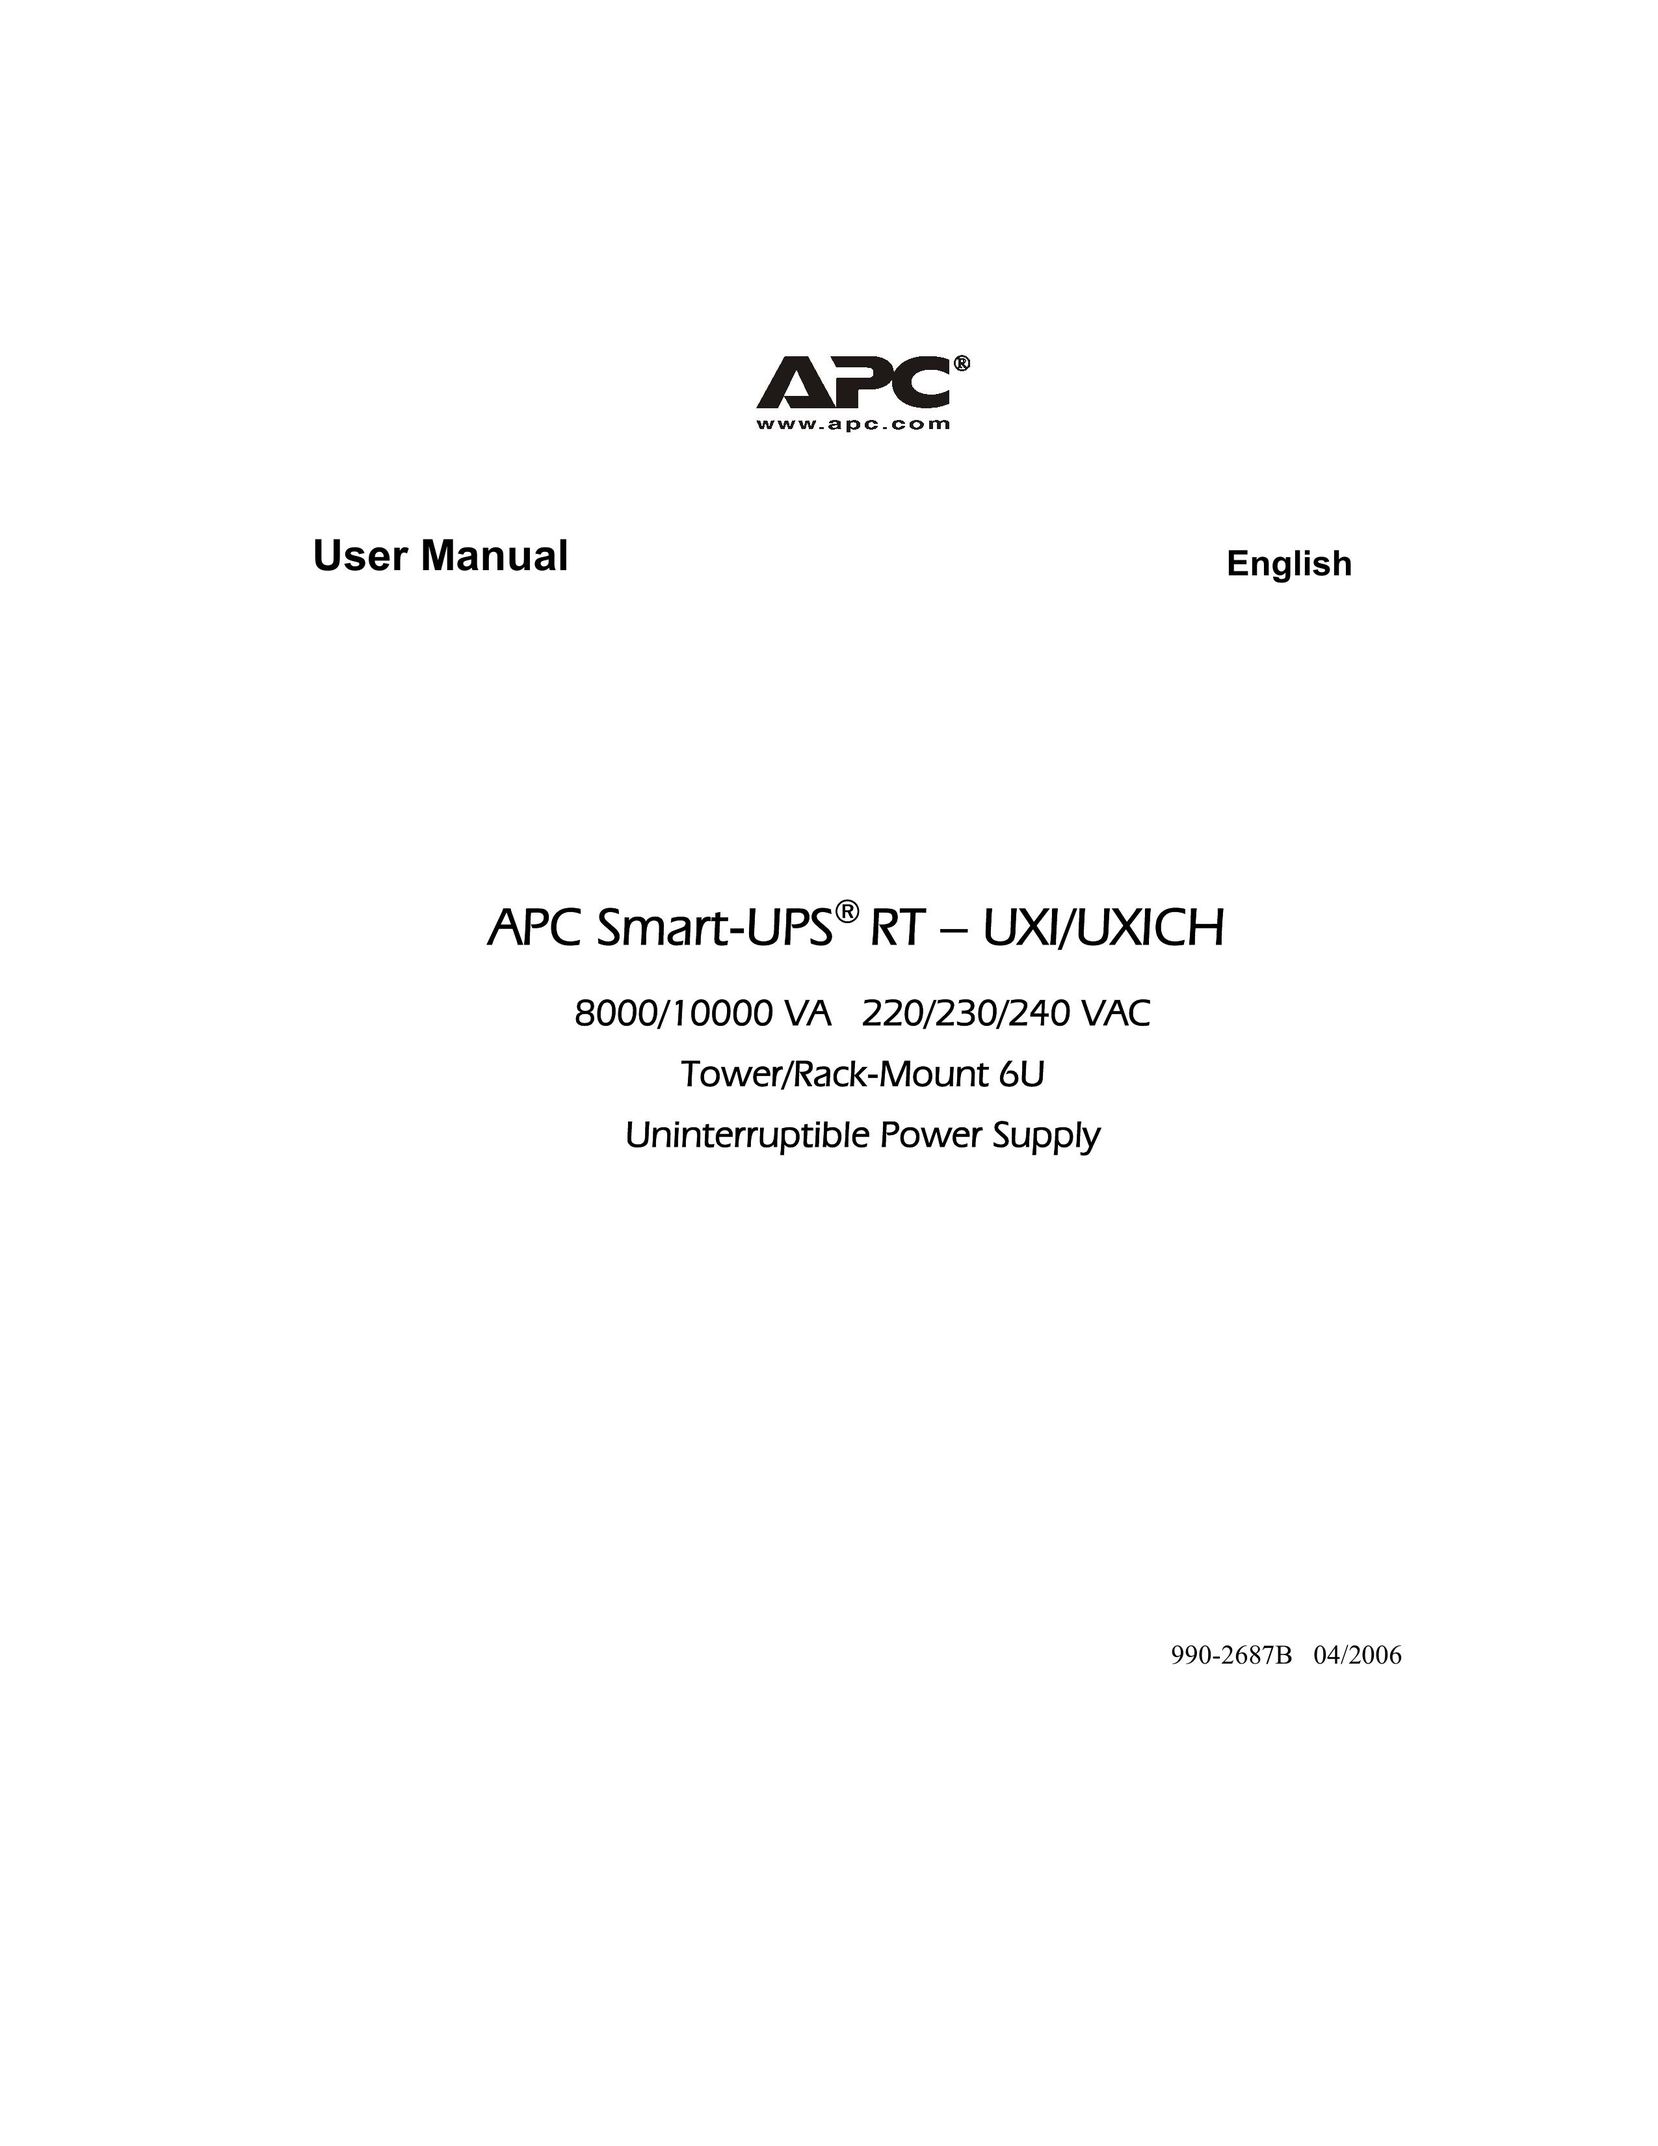 American Power Conversion 240 VAC Power Supply User Manual